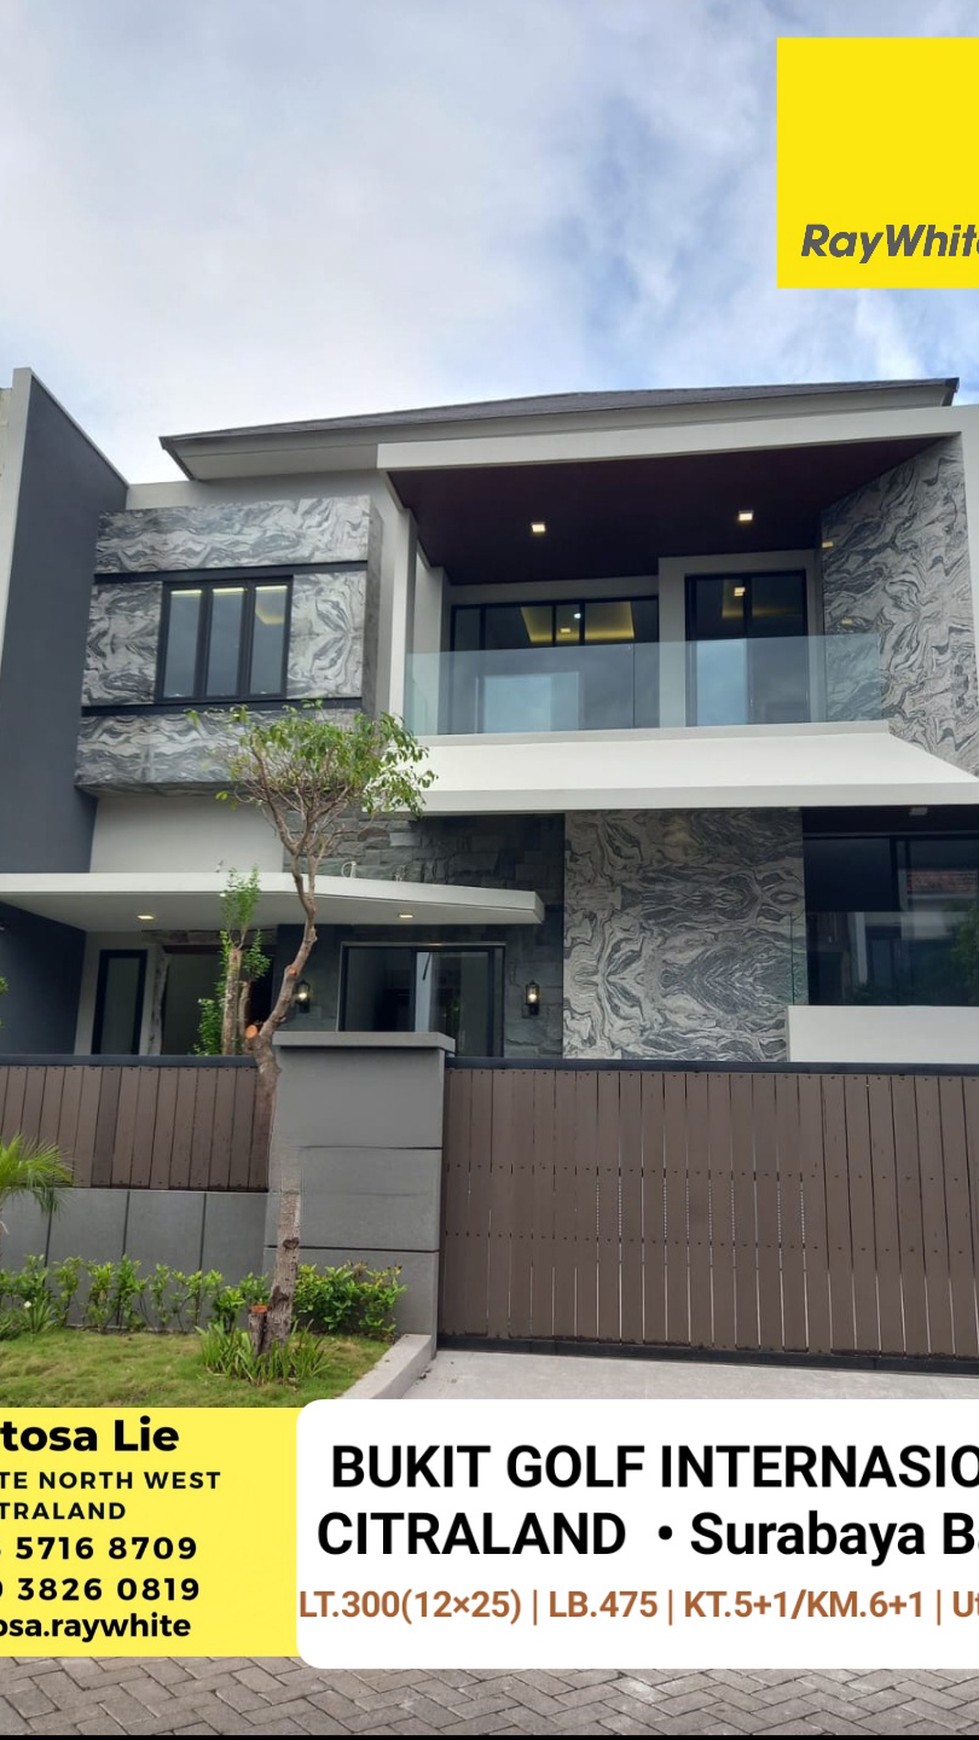 NEW Rumah Bukit Golf Internasional Citraland Surabaya  - SMART Home New FACADE MARMER - Surat SHM